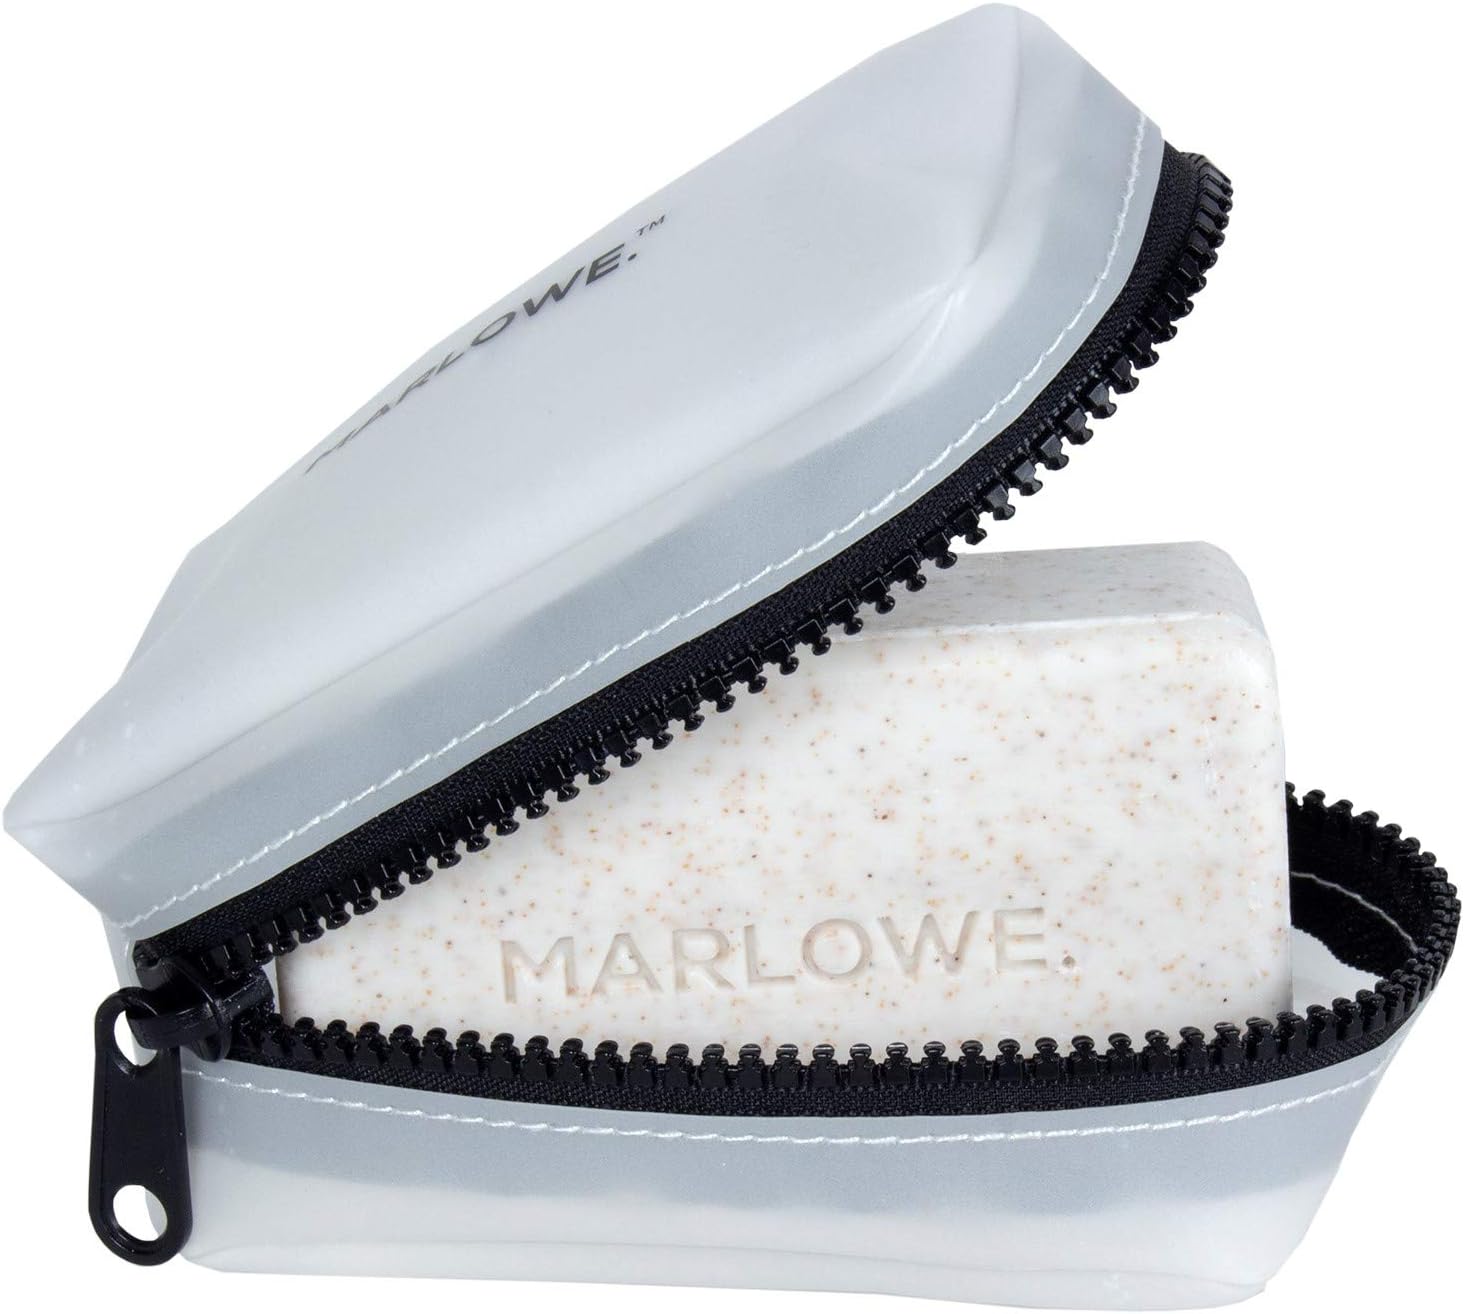 Marlowe. PVC Travel Soap Holder | Portable Bar Soap Case | Zipper Container, White